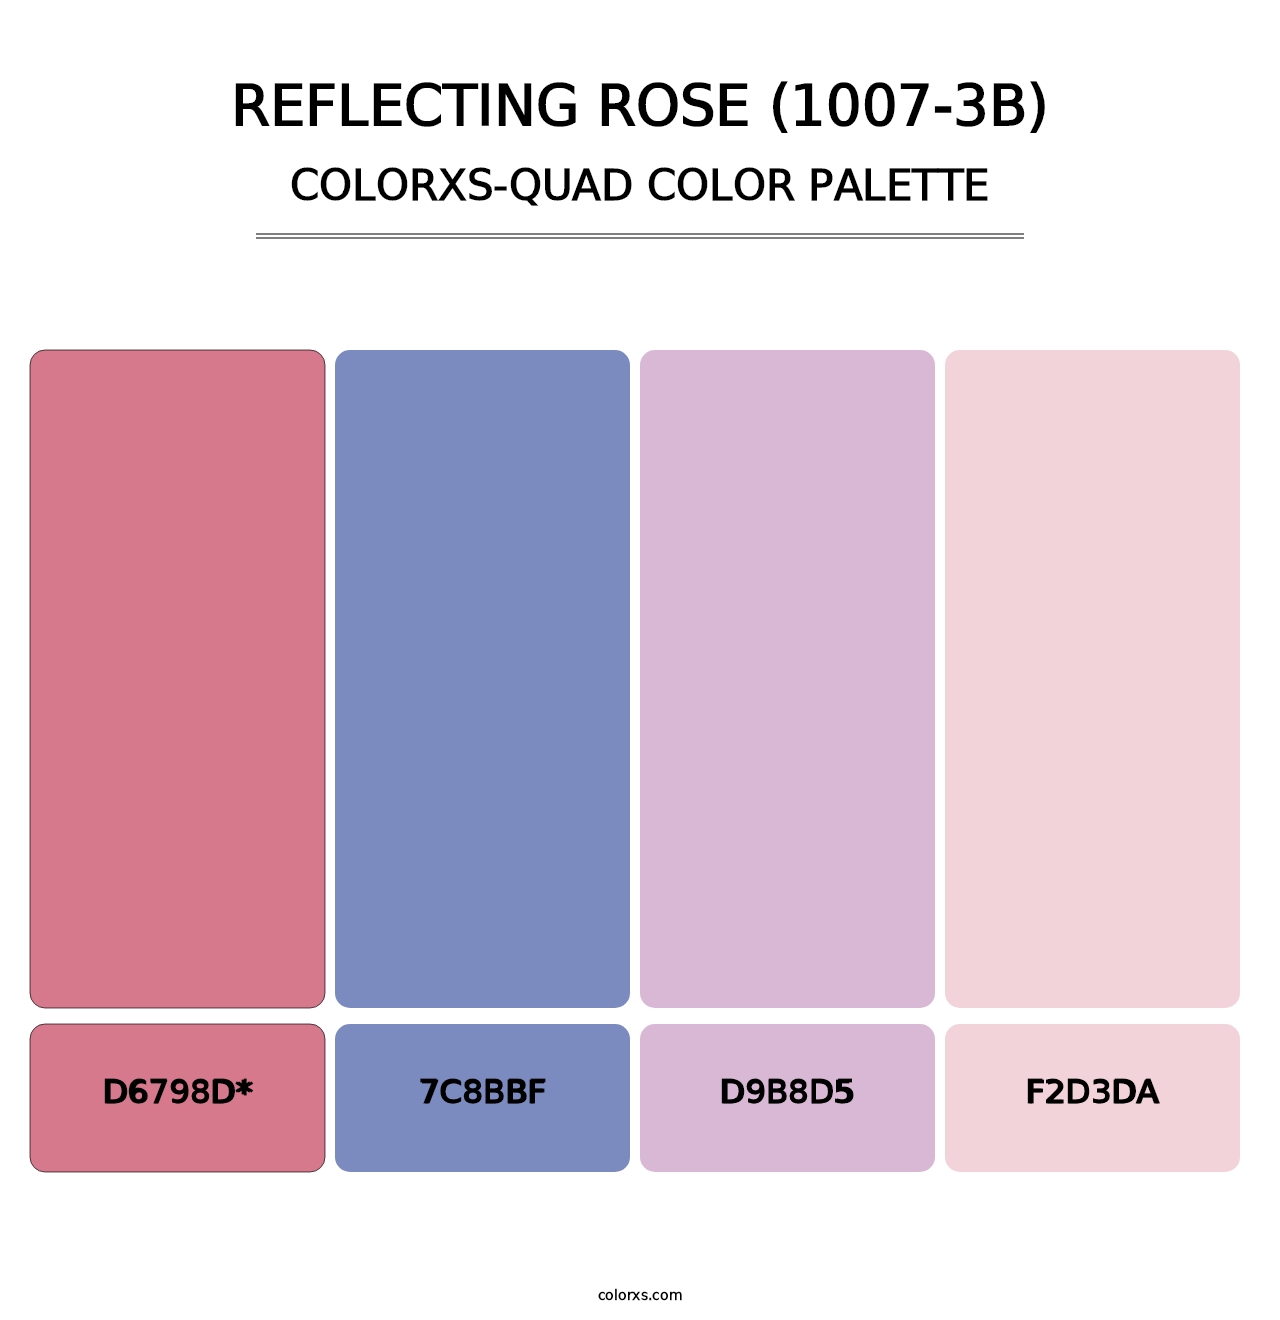 Reflecting Rose (1007-3B) - Colorxs Quad Palette